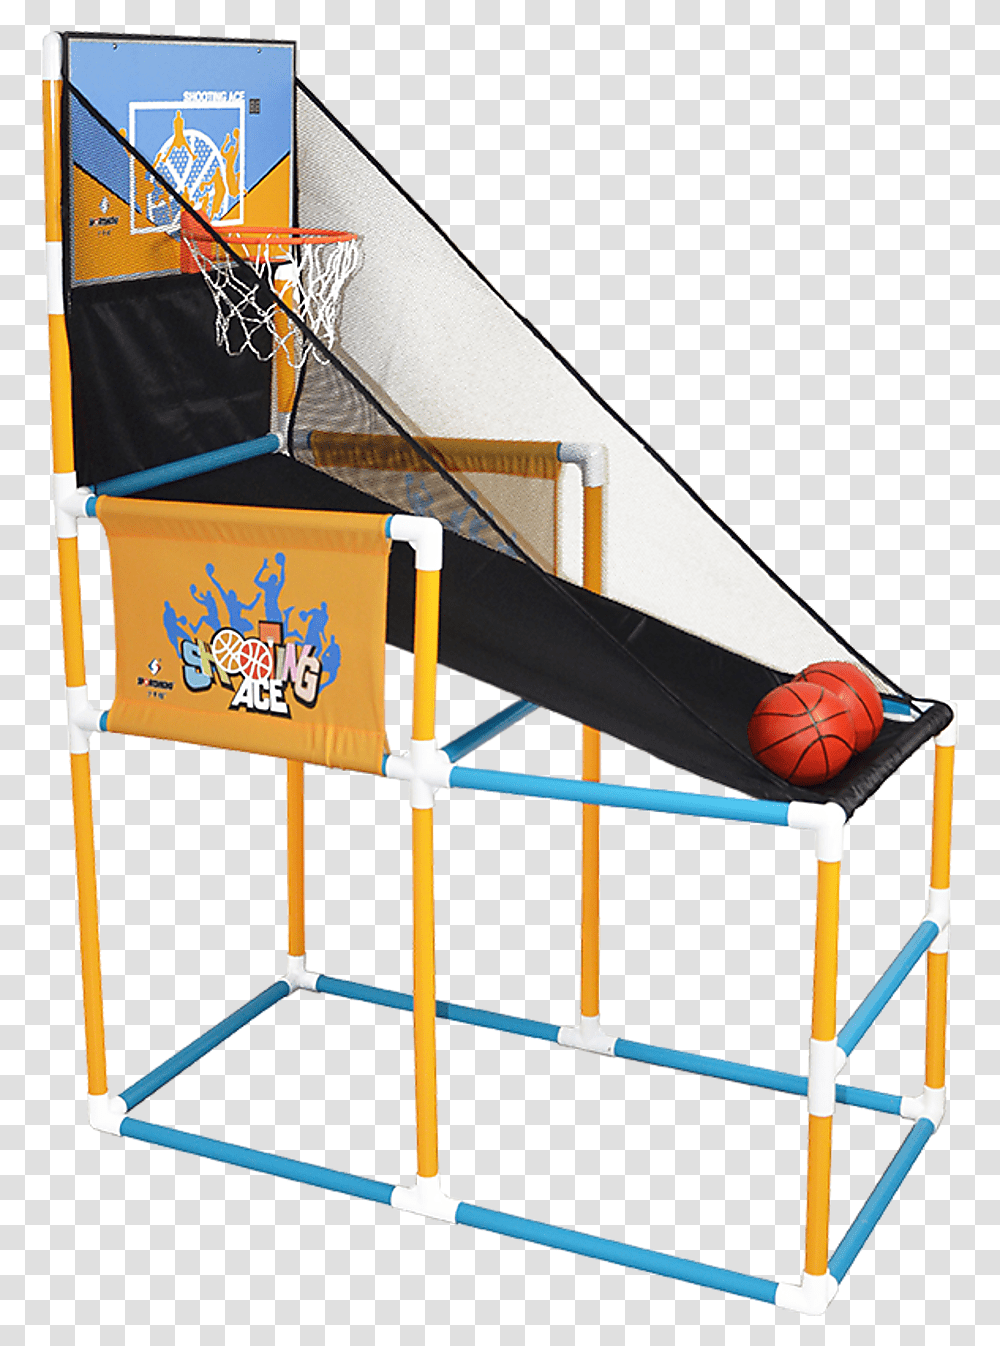 Kids Basketball Hoop Arcade Game Games & Hobbies > Games Horizontal, Trampoline, Handrail Transparent Png